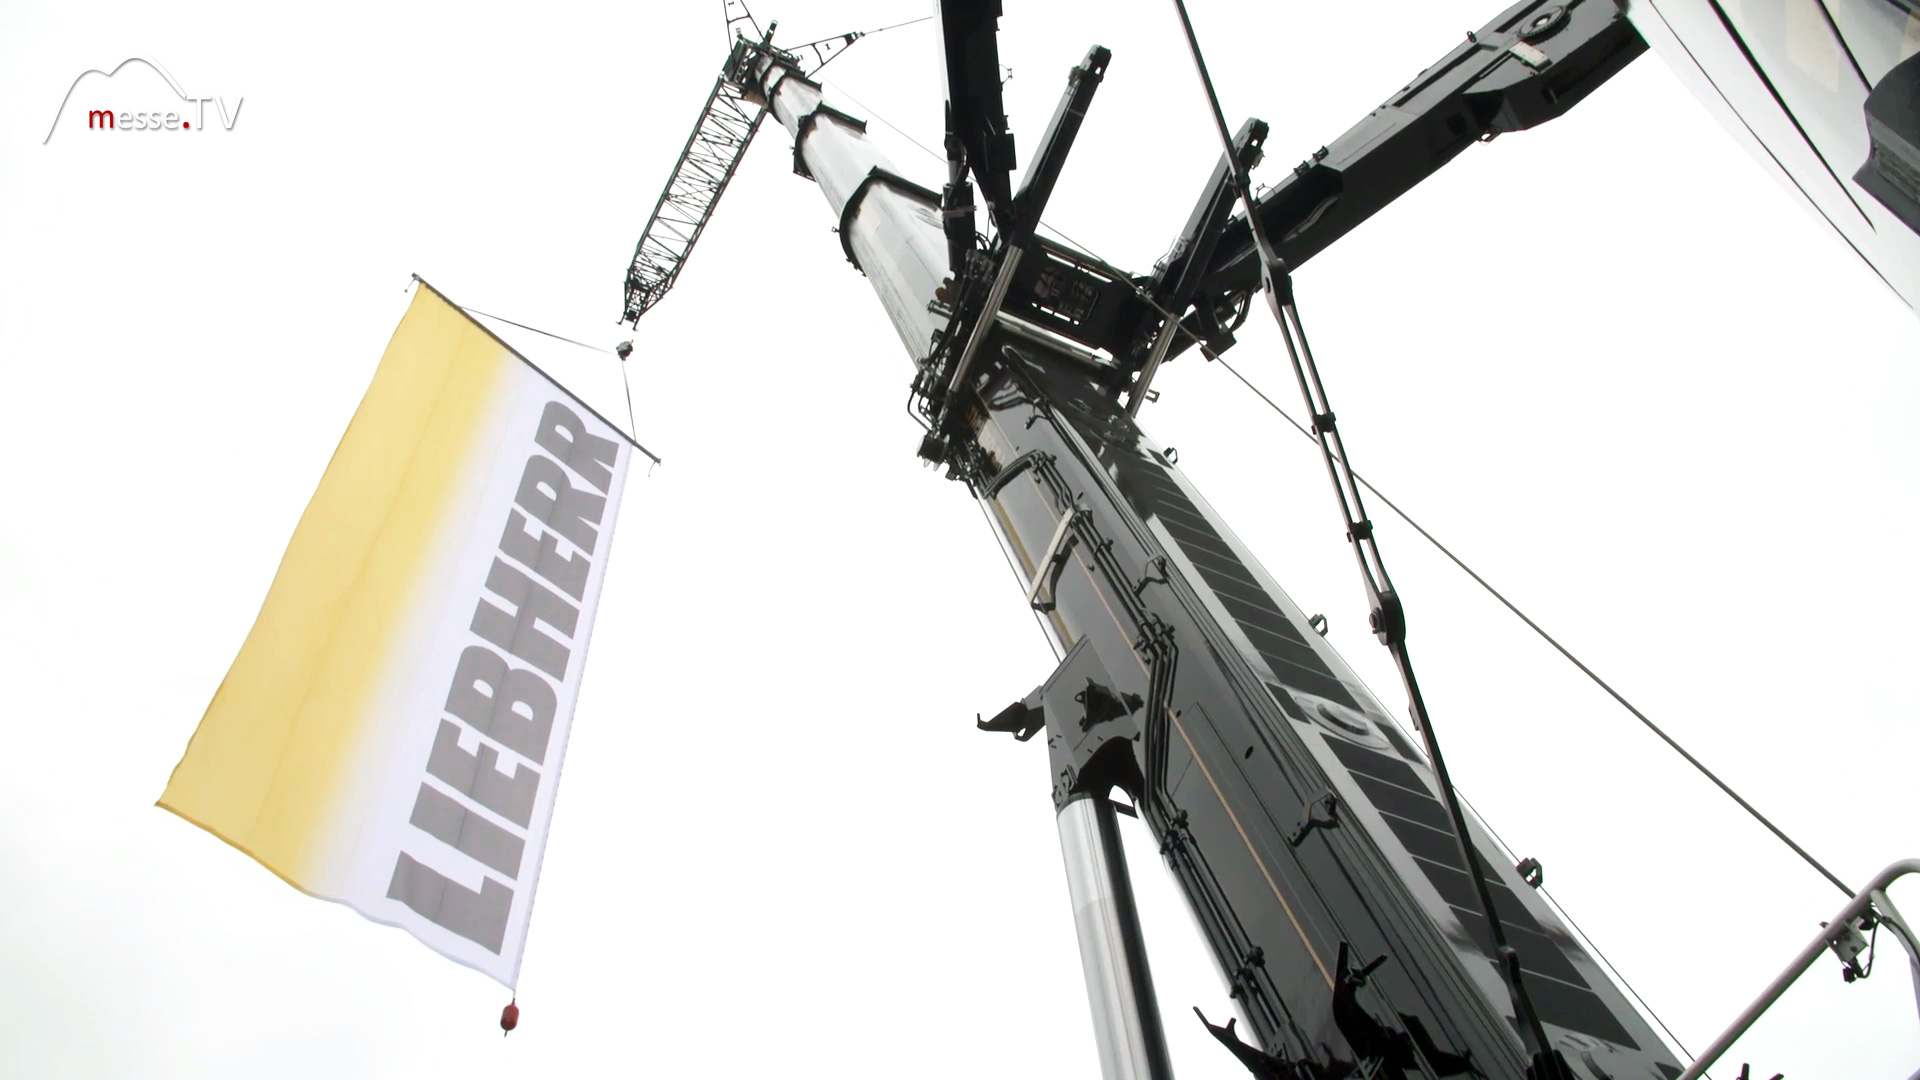 LIEBHERR mobile crane LTM 1650 8 1 with telescopic jib